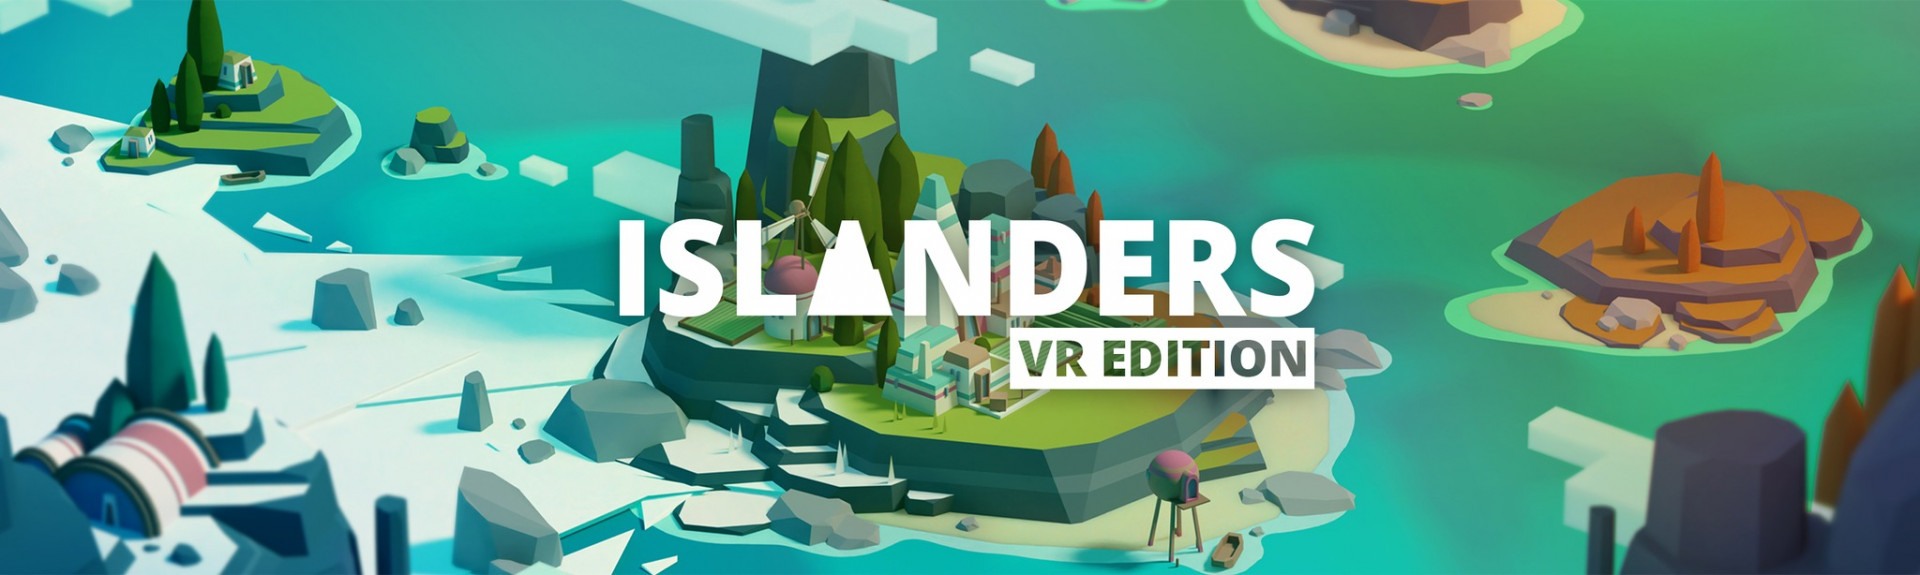 ISLANDERS VR Edition